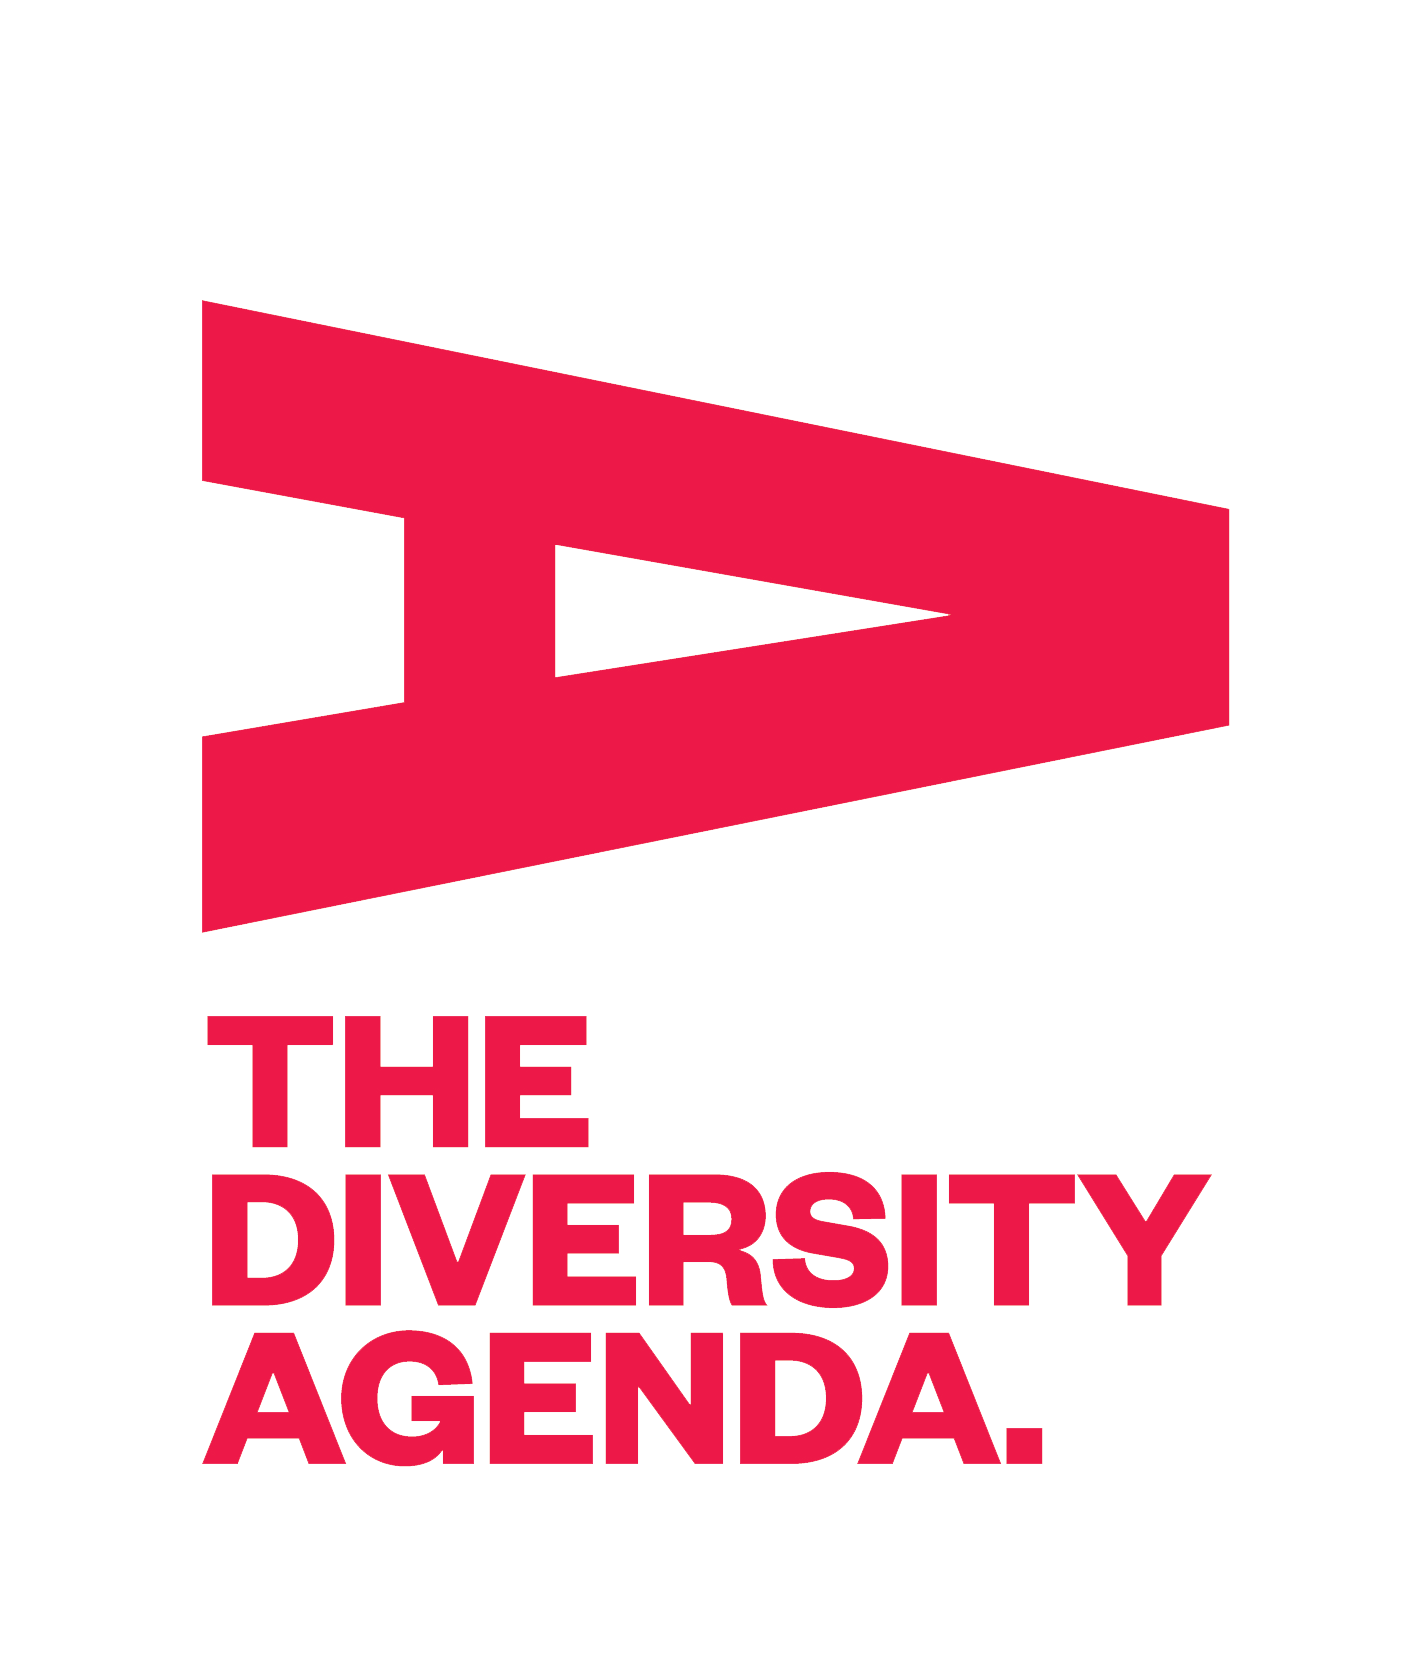 The Diversity Agenda logo